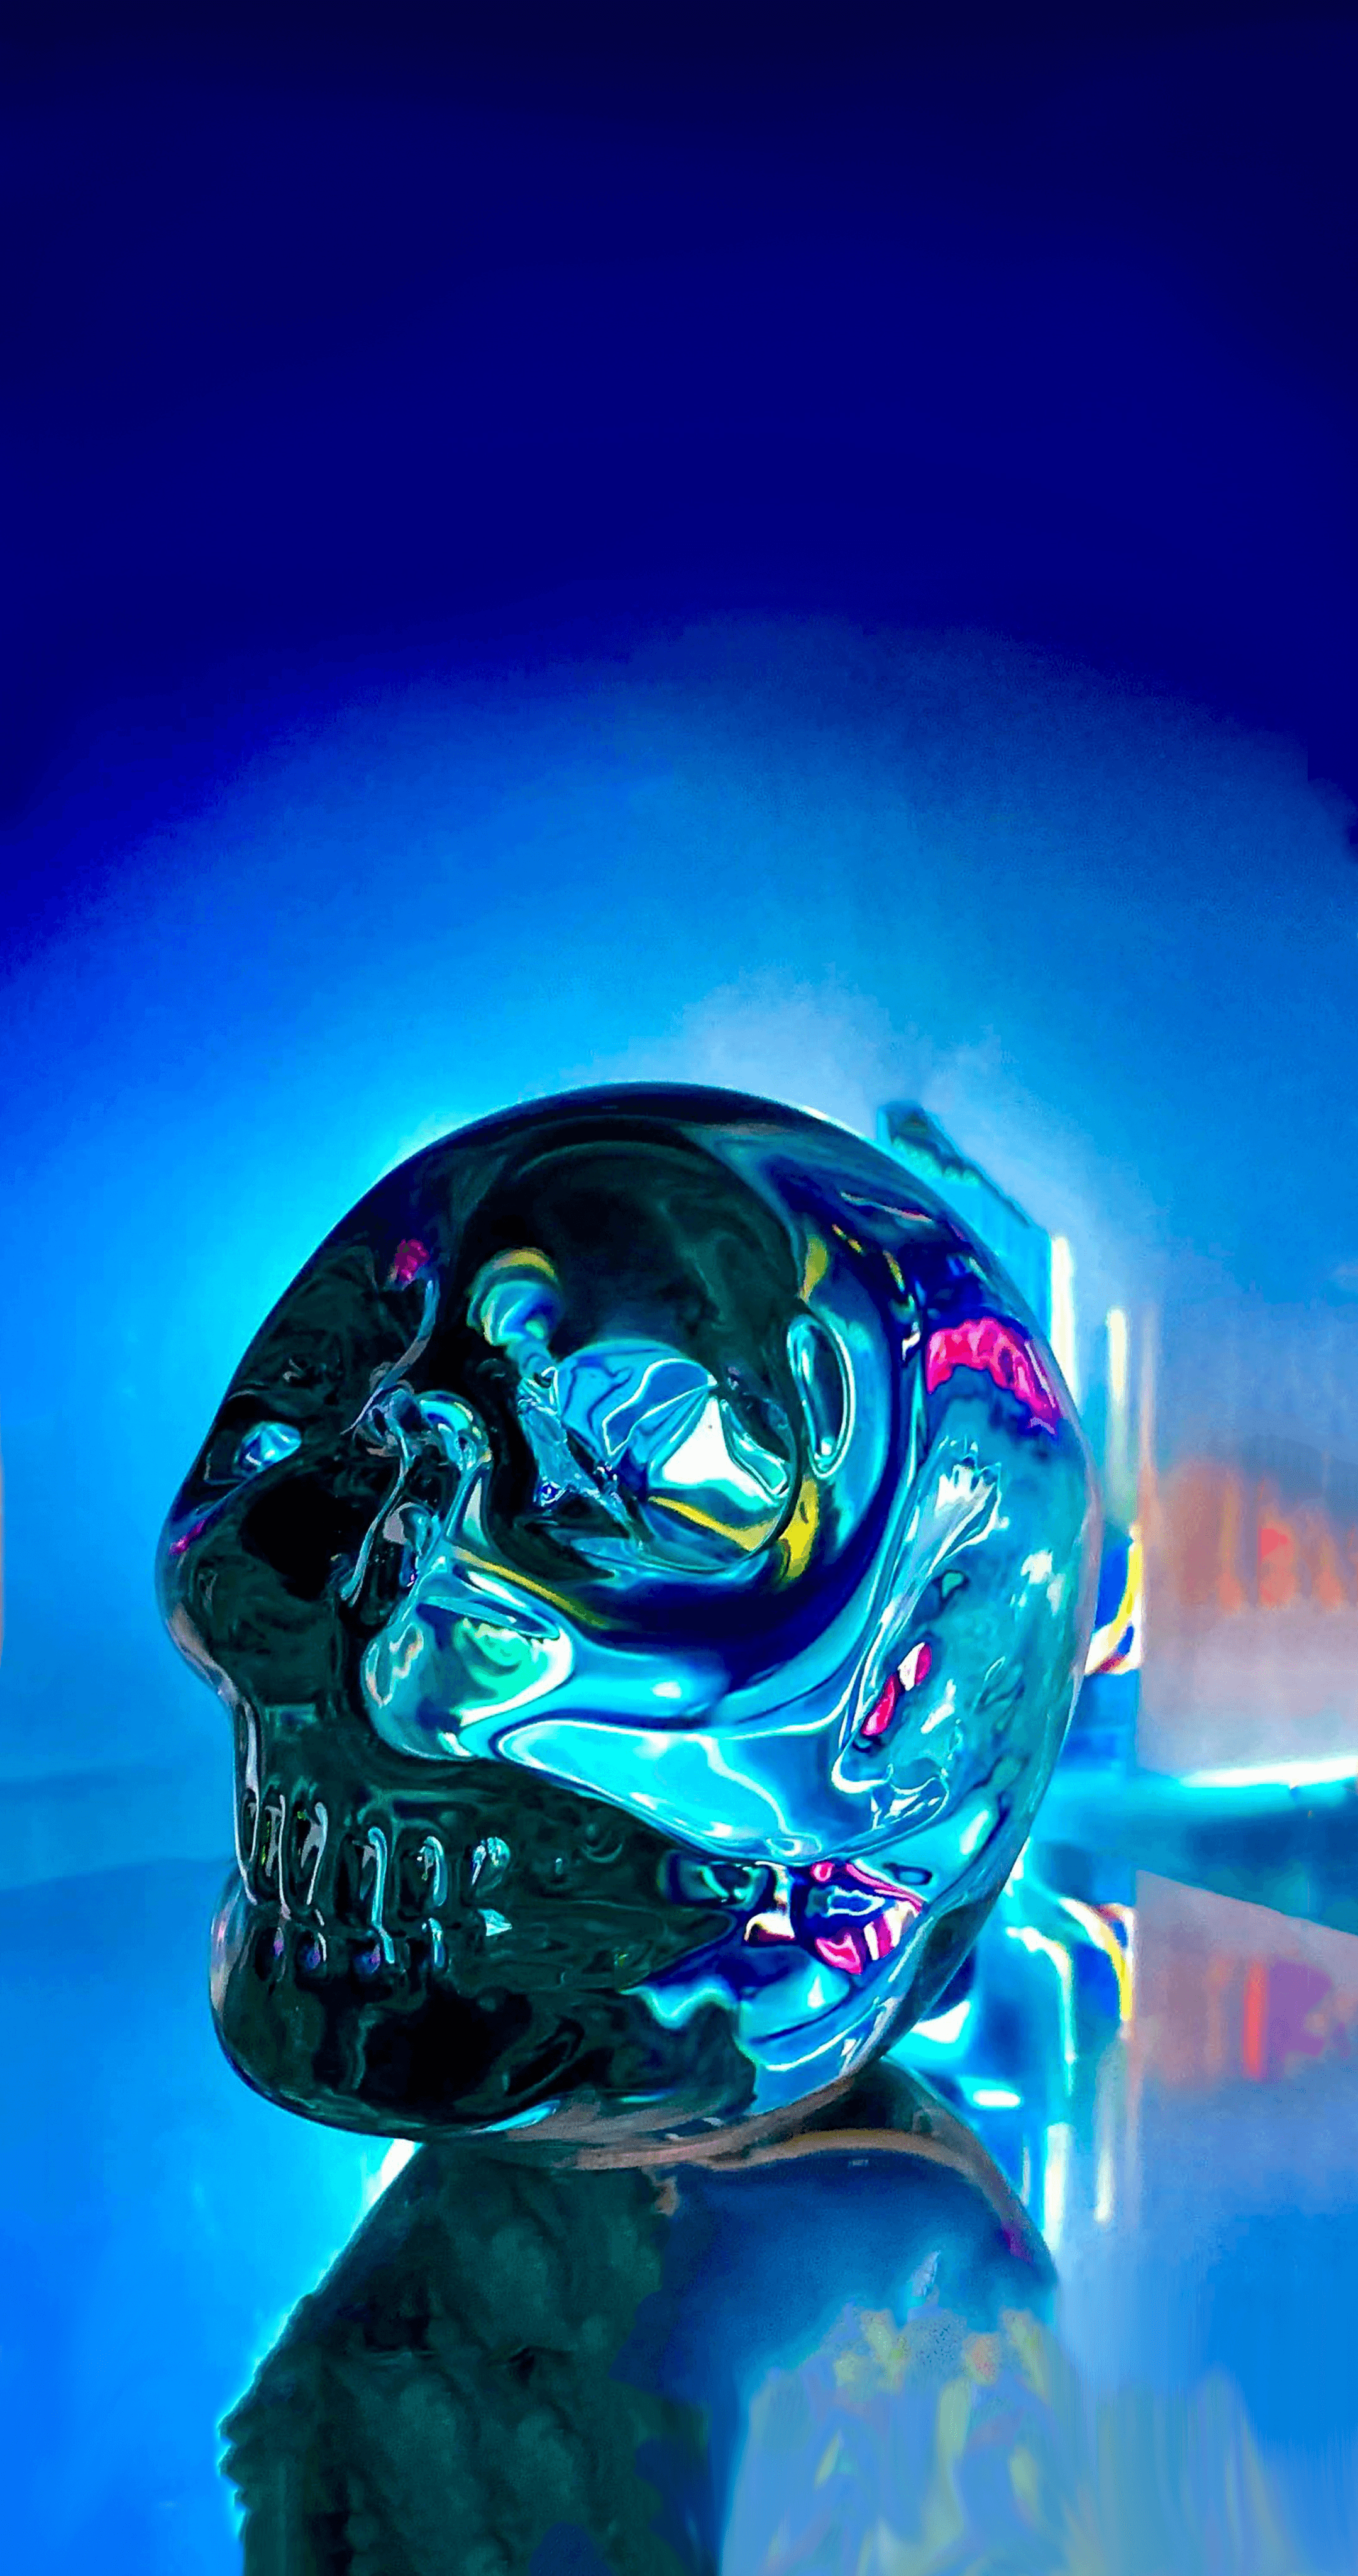 Skull_Study01_in_Blue